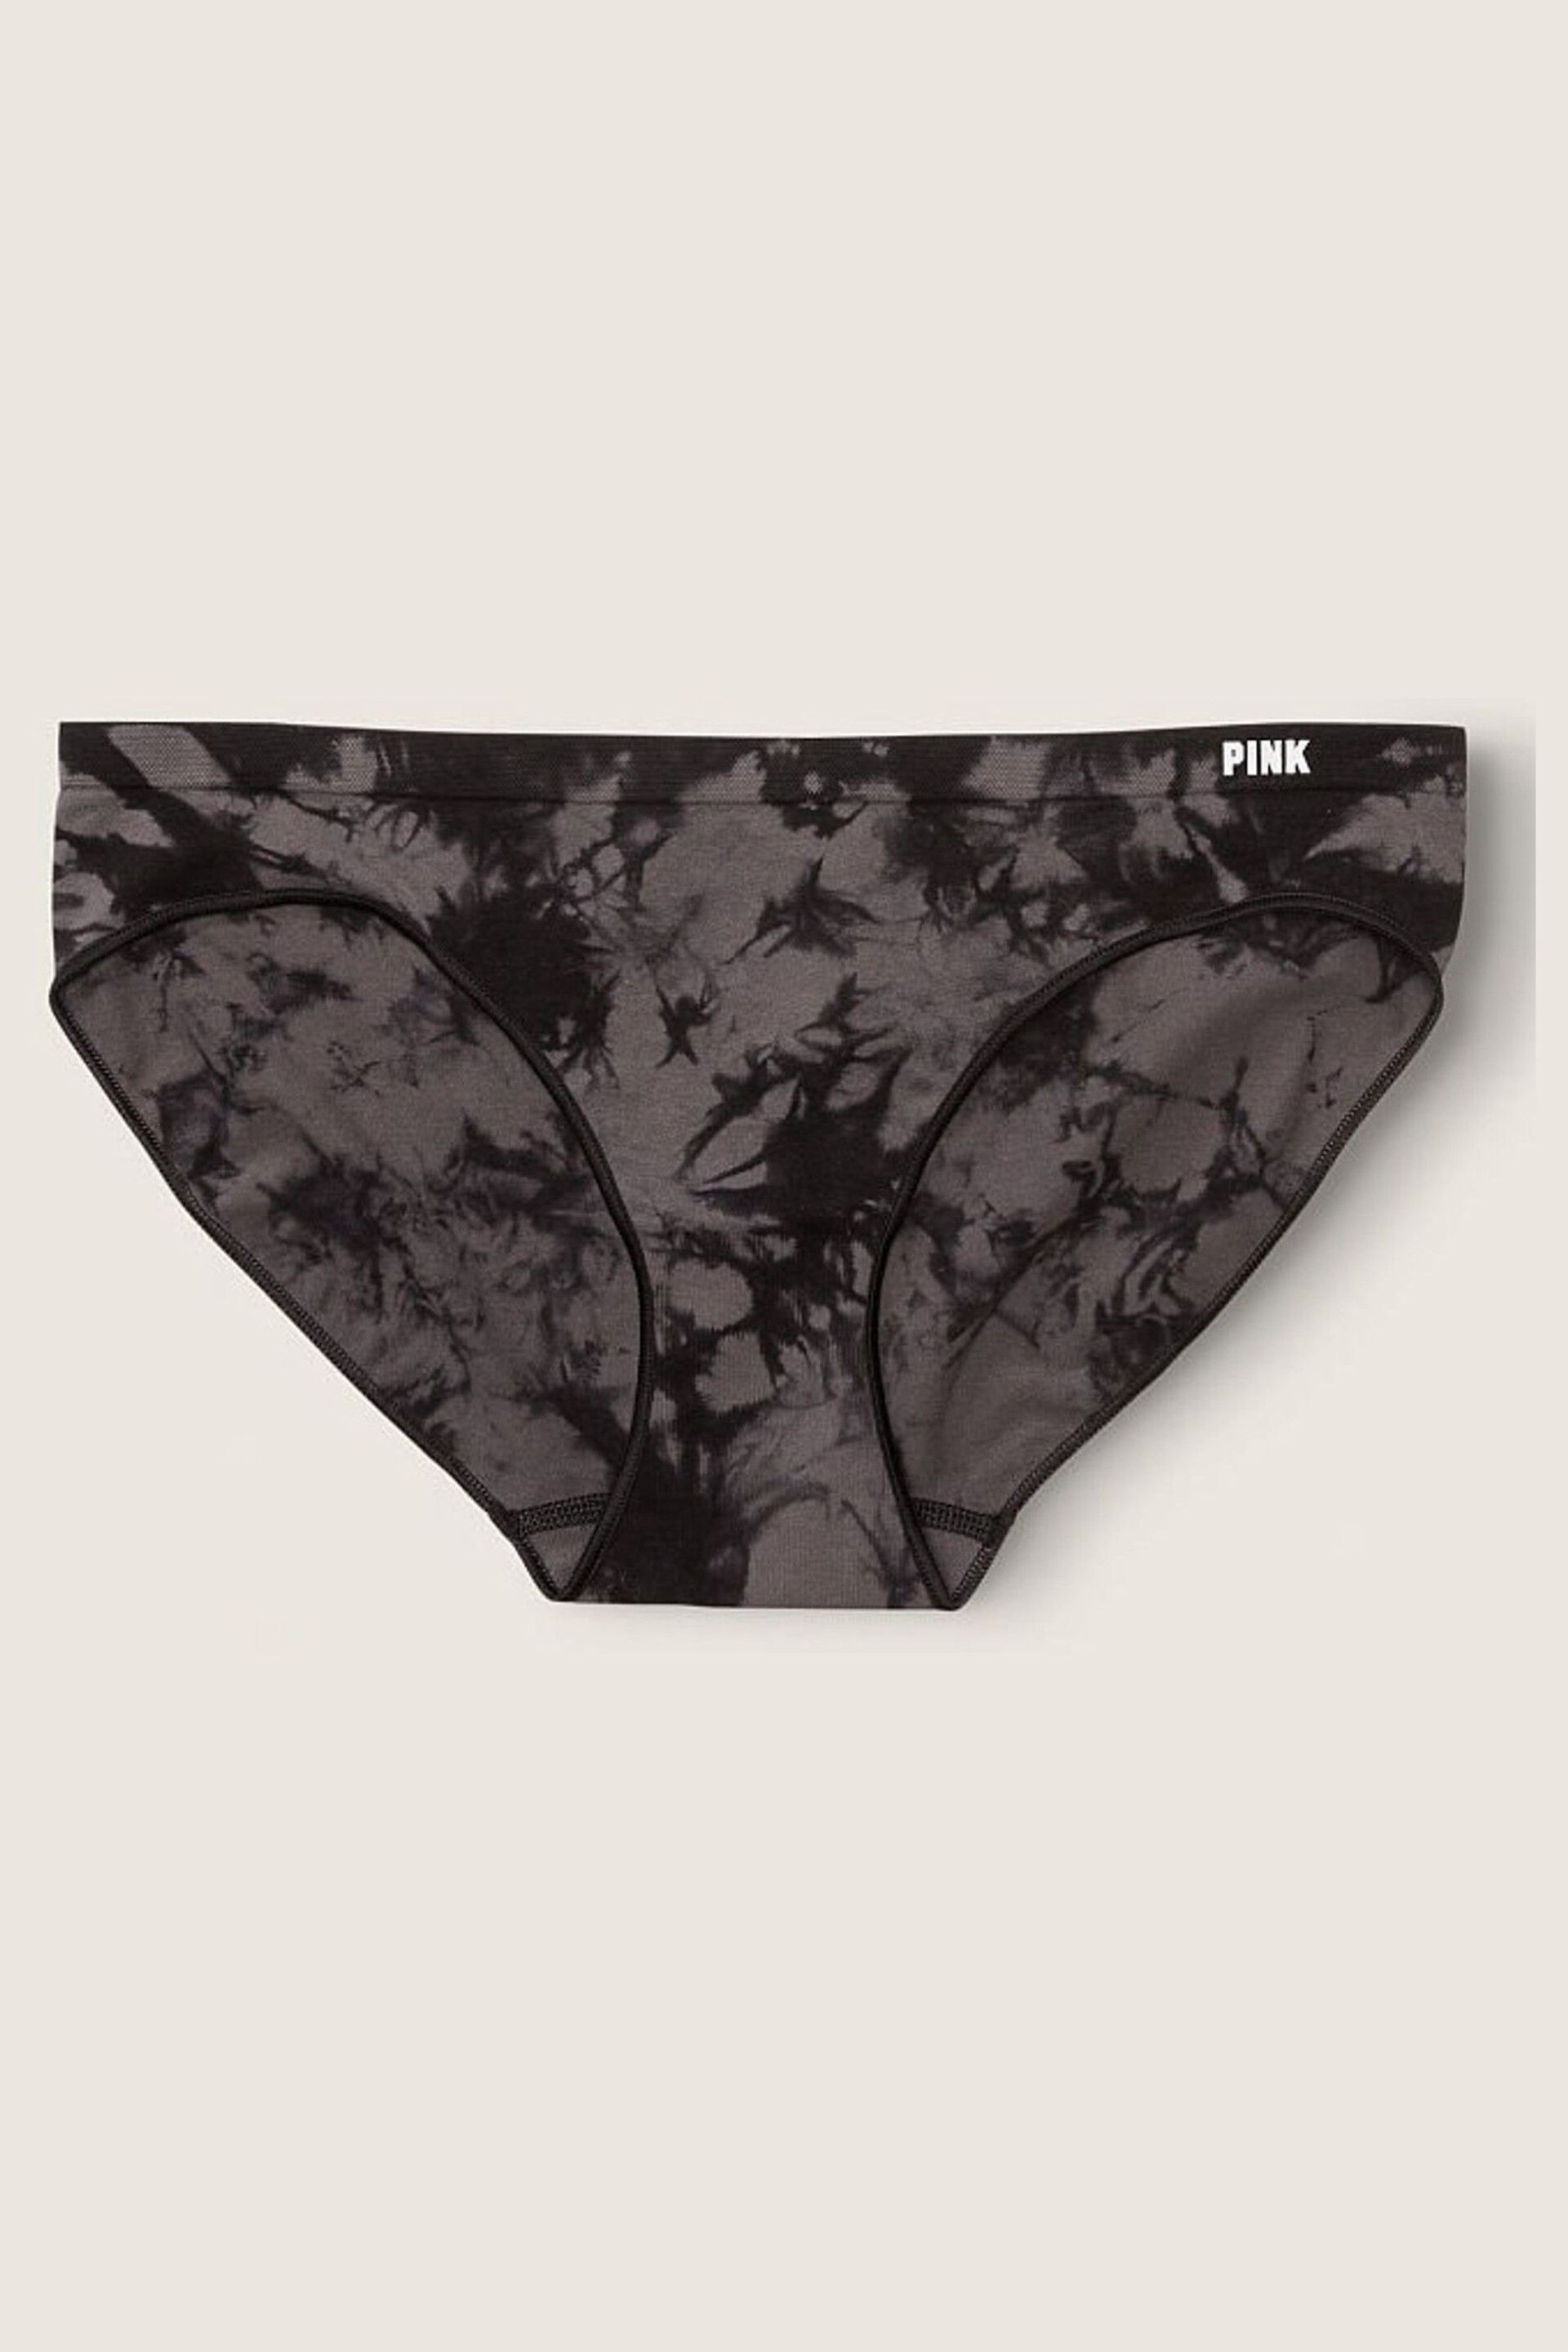 Victoria's Secret PINK Dark Charcoal Tie Dye Grey Bikini Seamless Knickers - Image 3 of 4